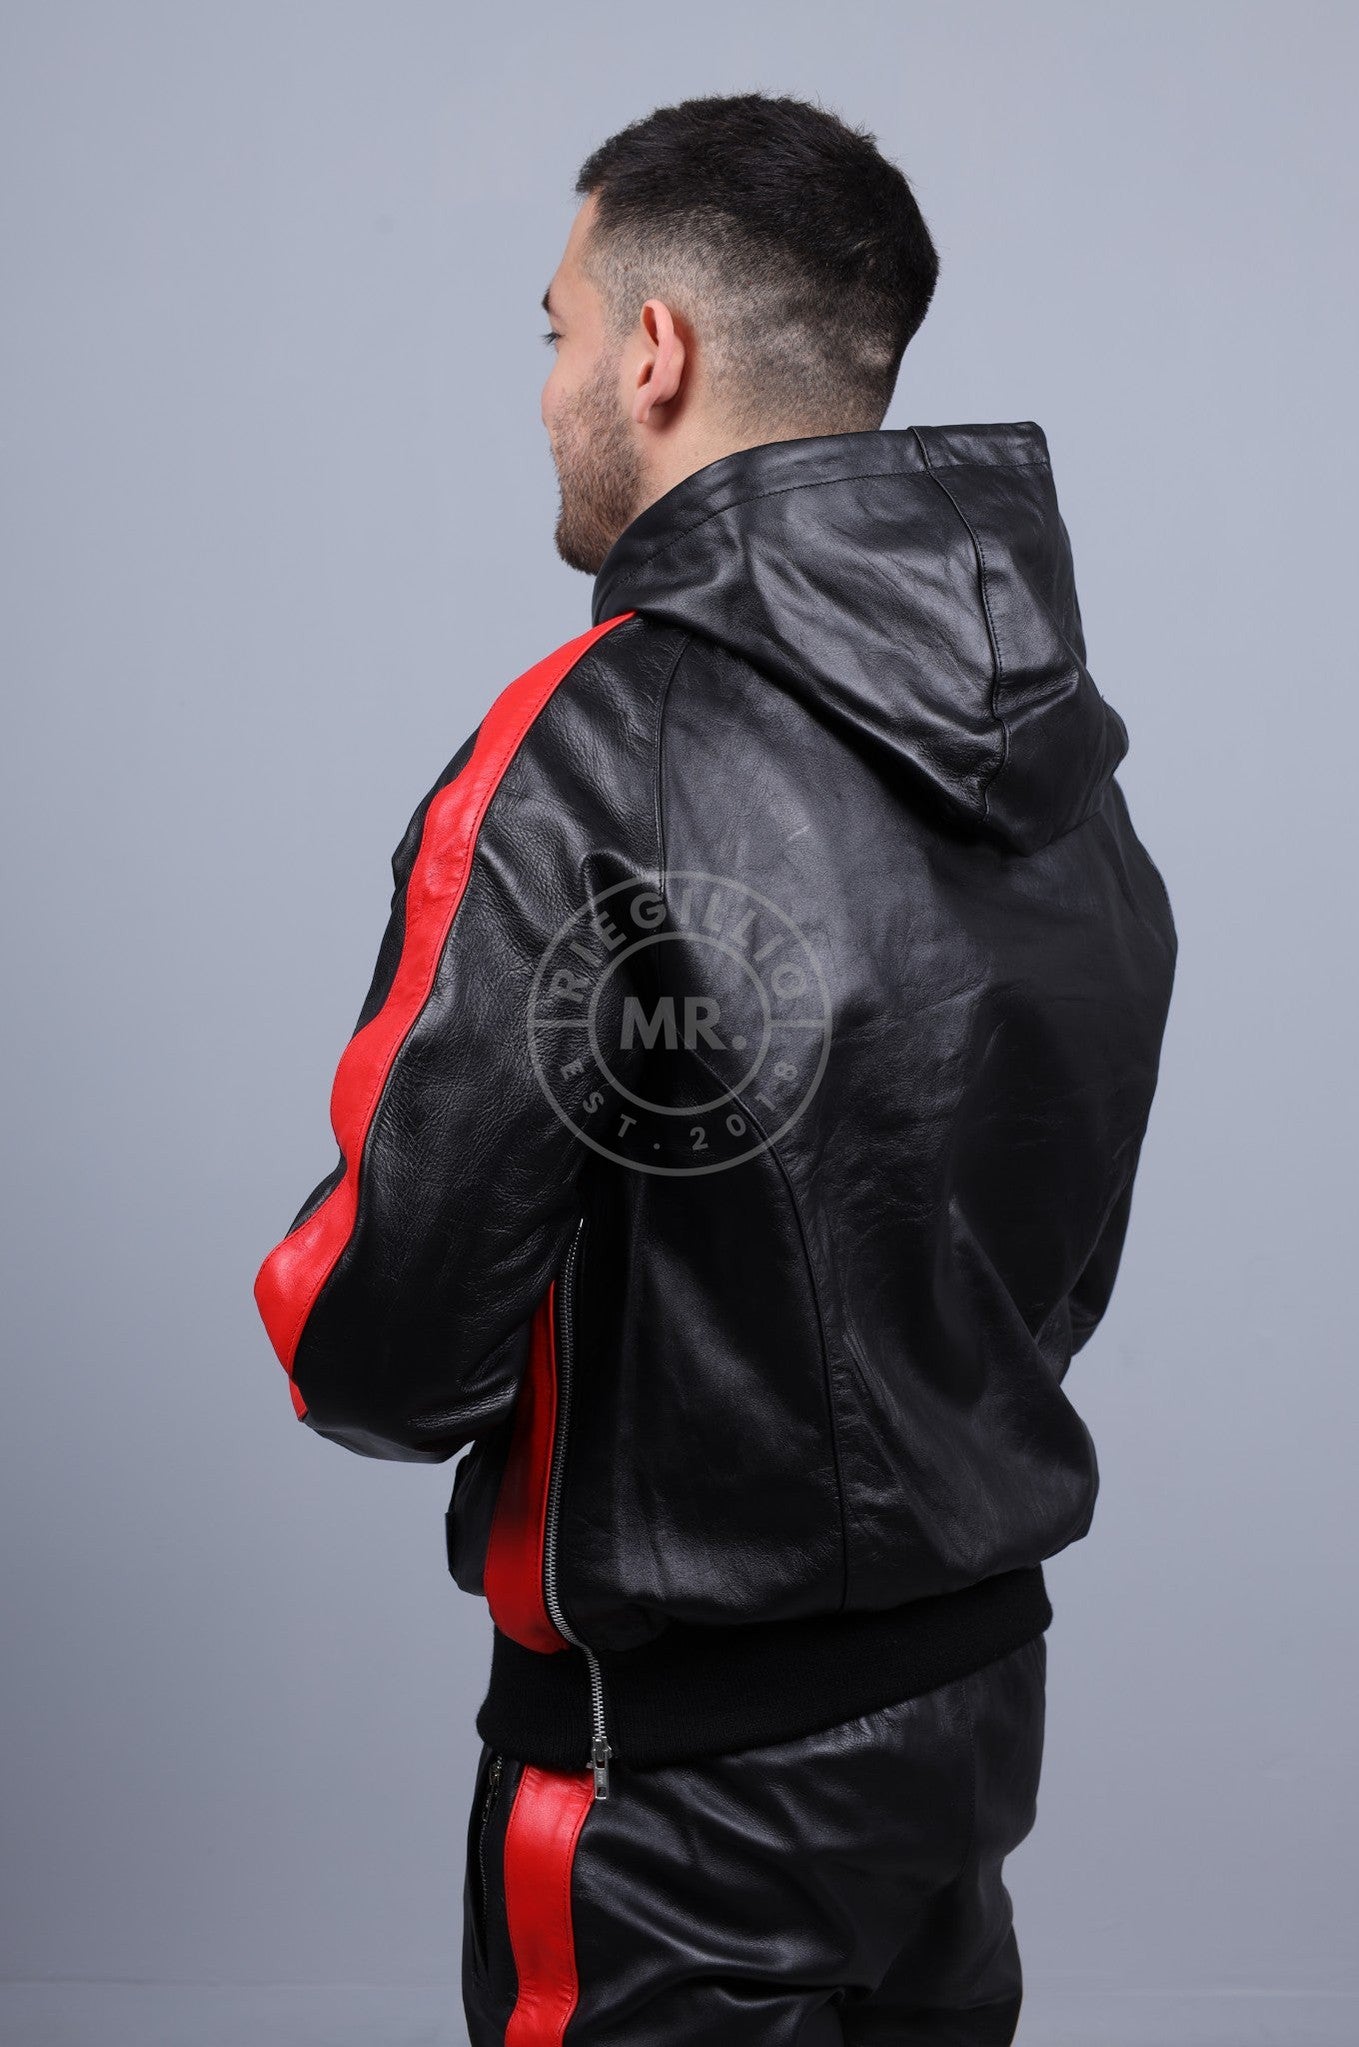 Black Leather Sports Hoodie - Red Stripe at MR. Riegillio